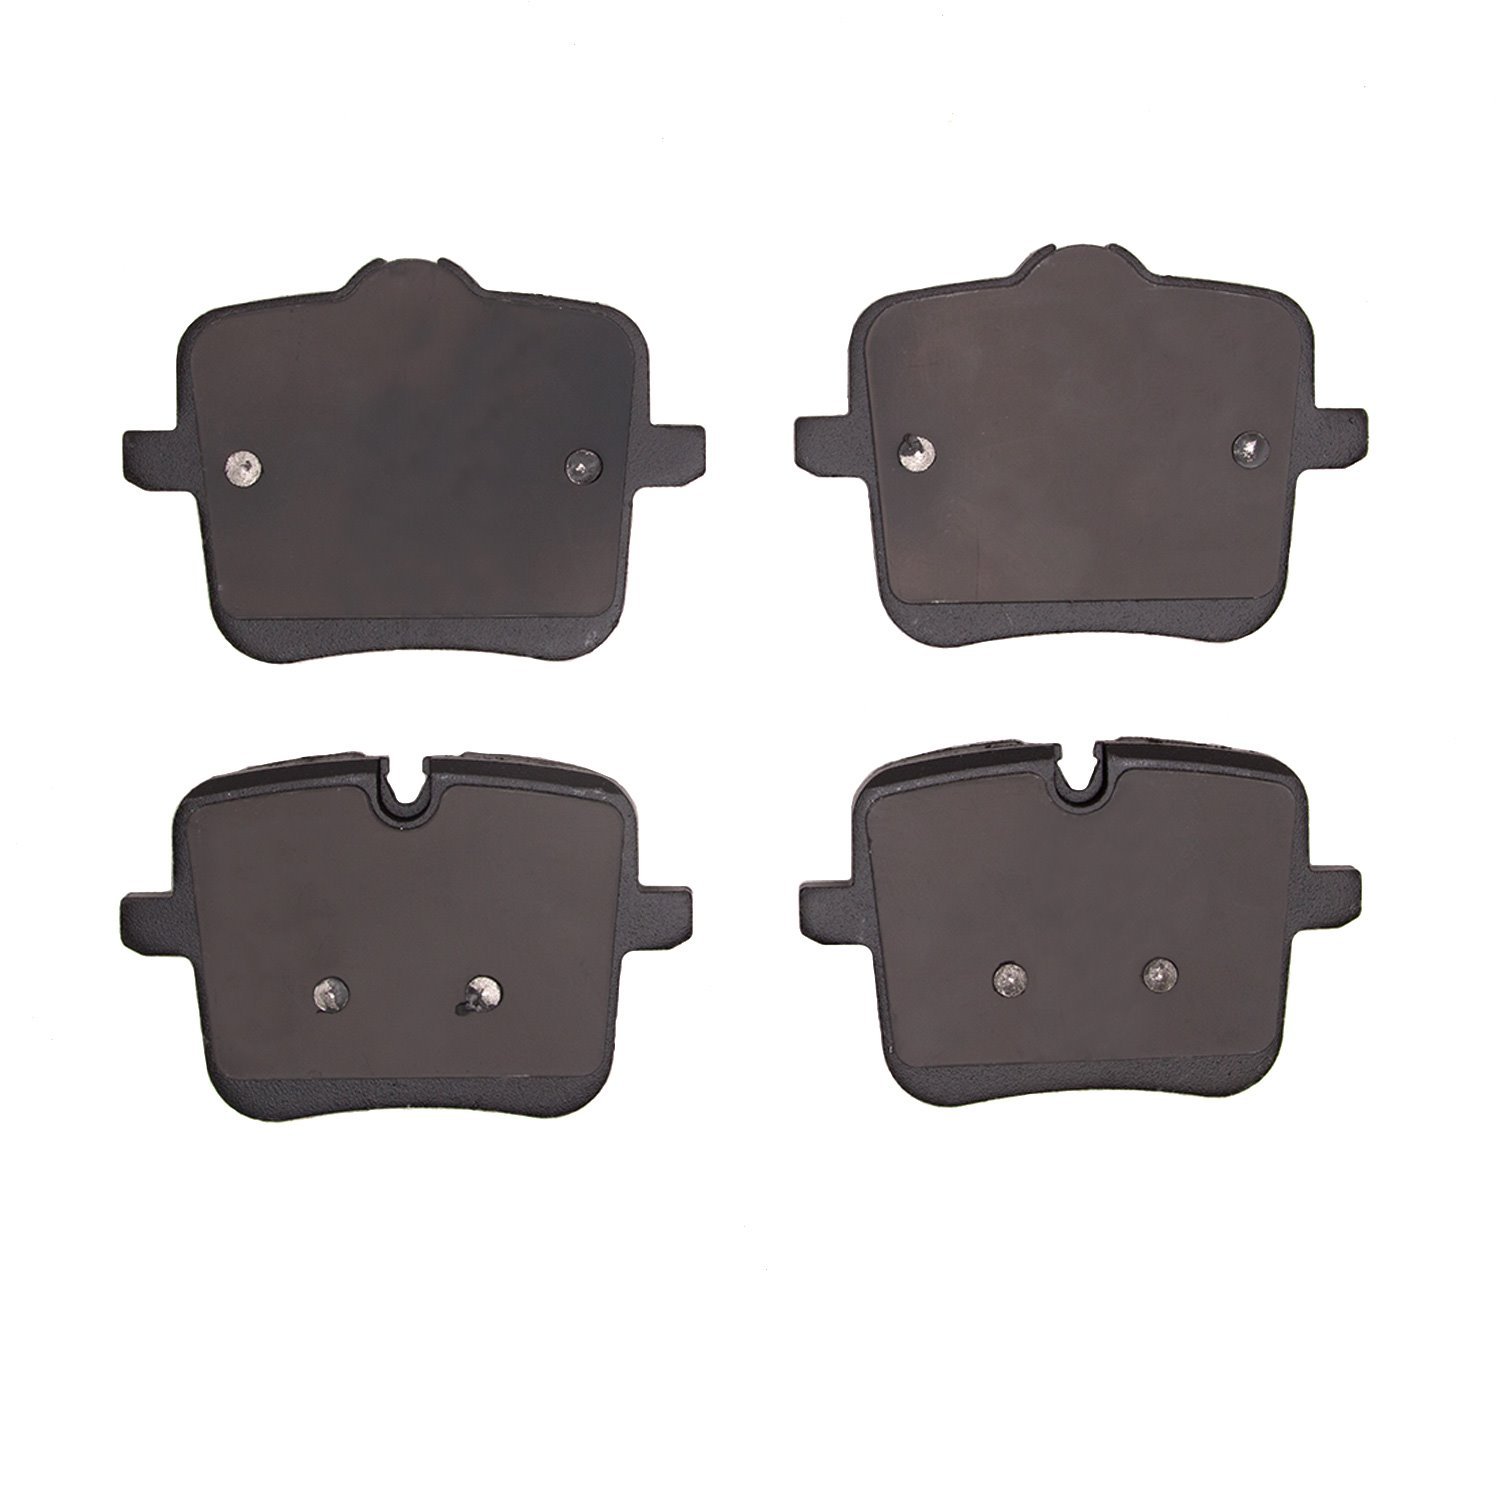 1311-2059-00 3000-Series Semi-Metallic Brake Pads, Fits Select Multiple Makes/Models, Position: Rear